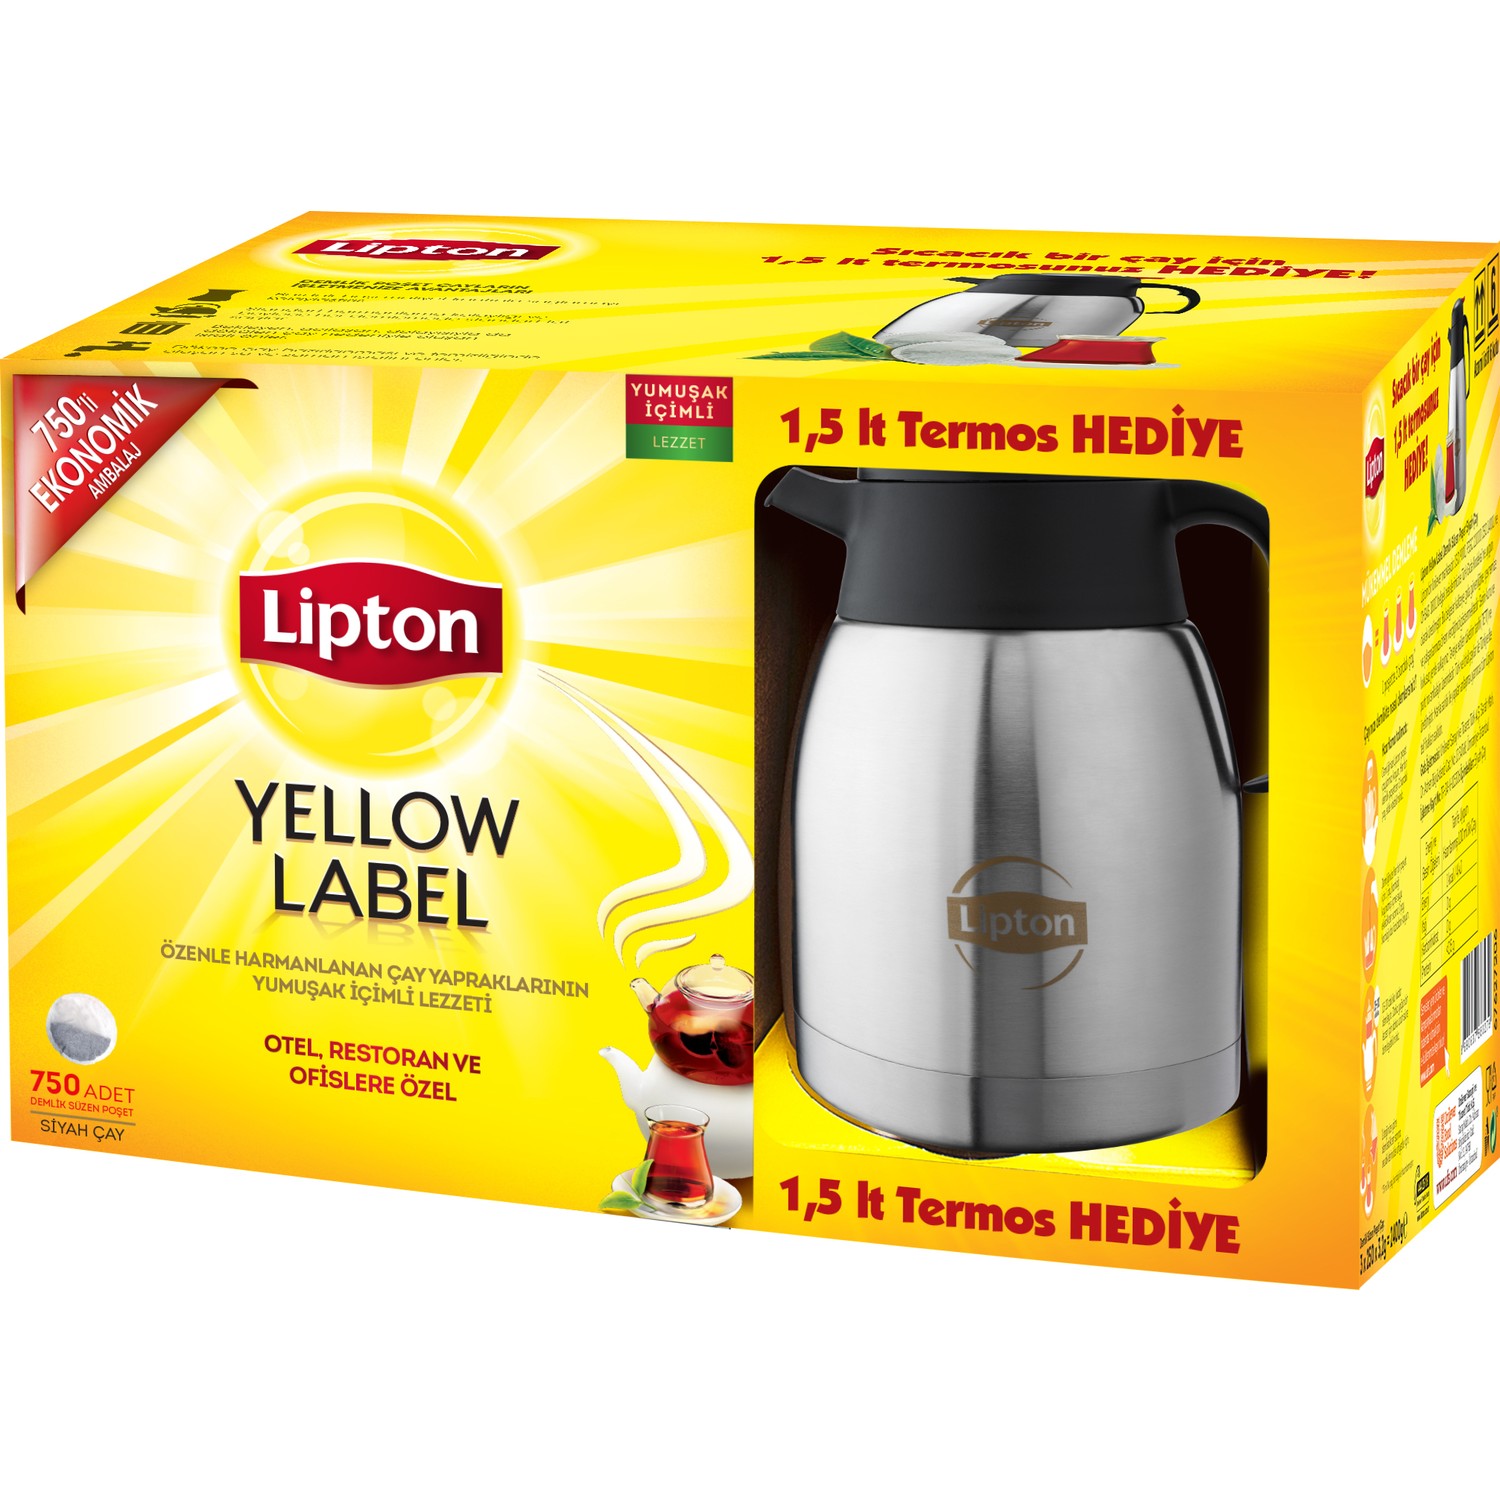 Lipton Yellow Label Siyah Demlik Poşet Çay 750'li + Hediye 1.5 L Termos